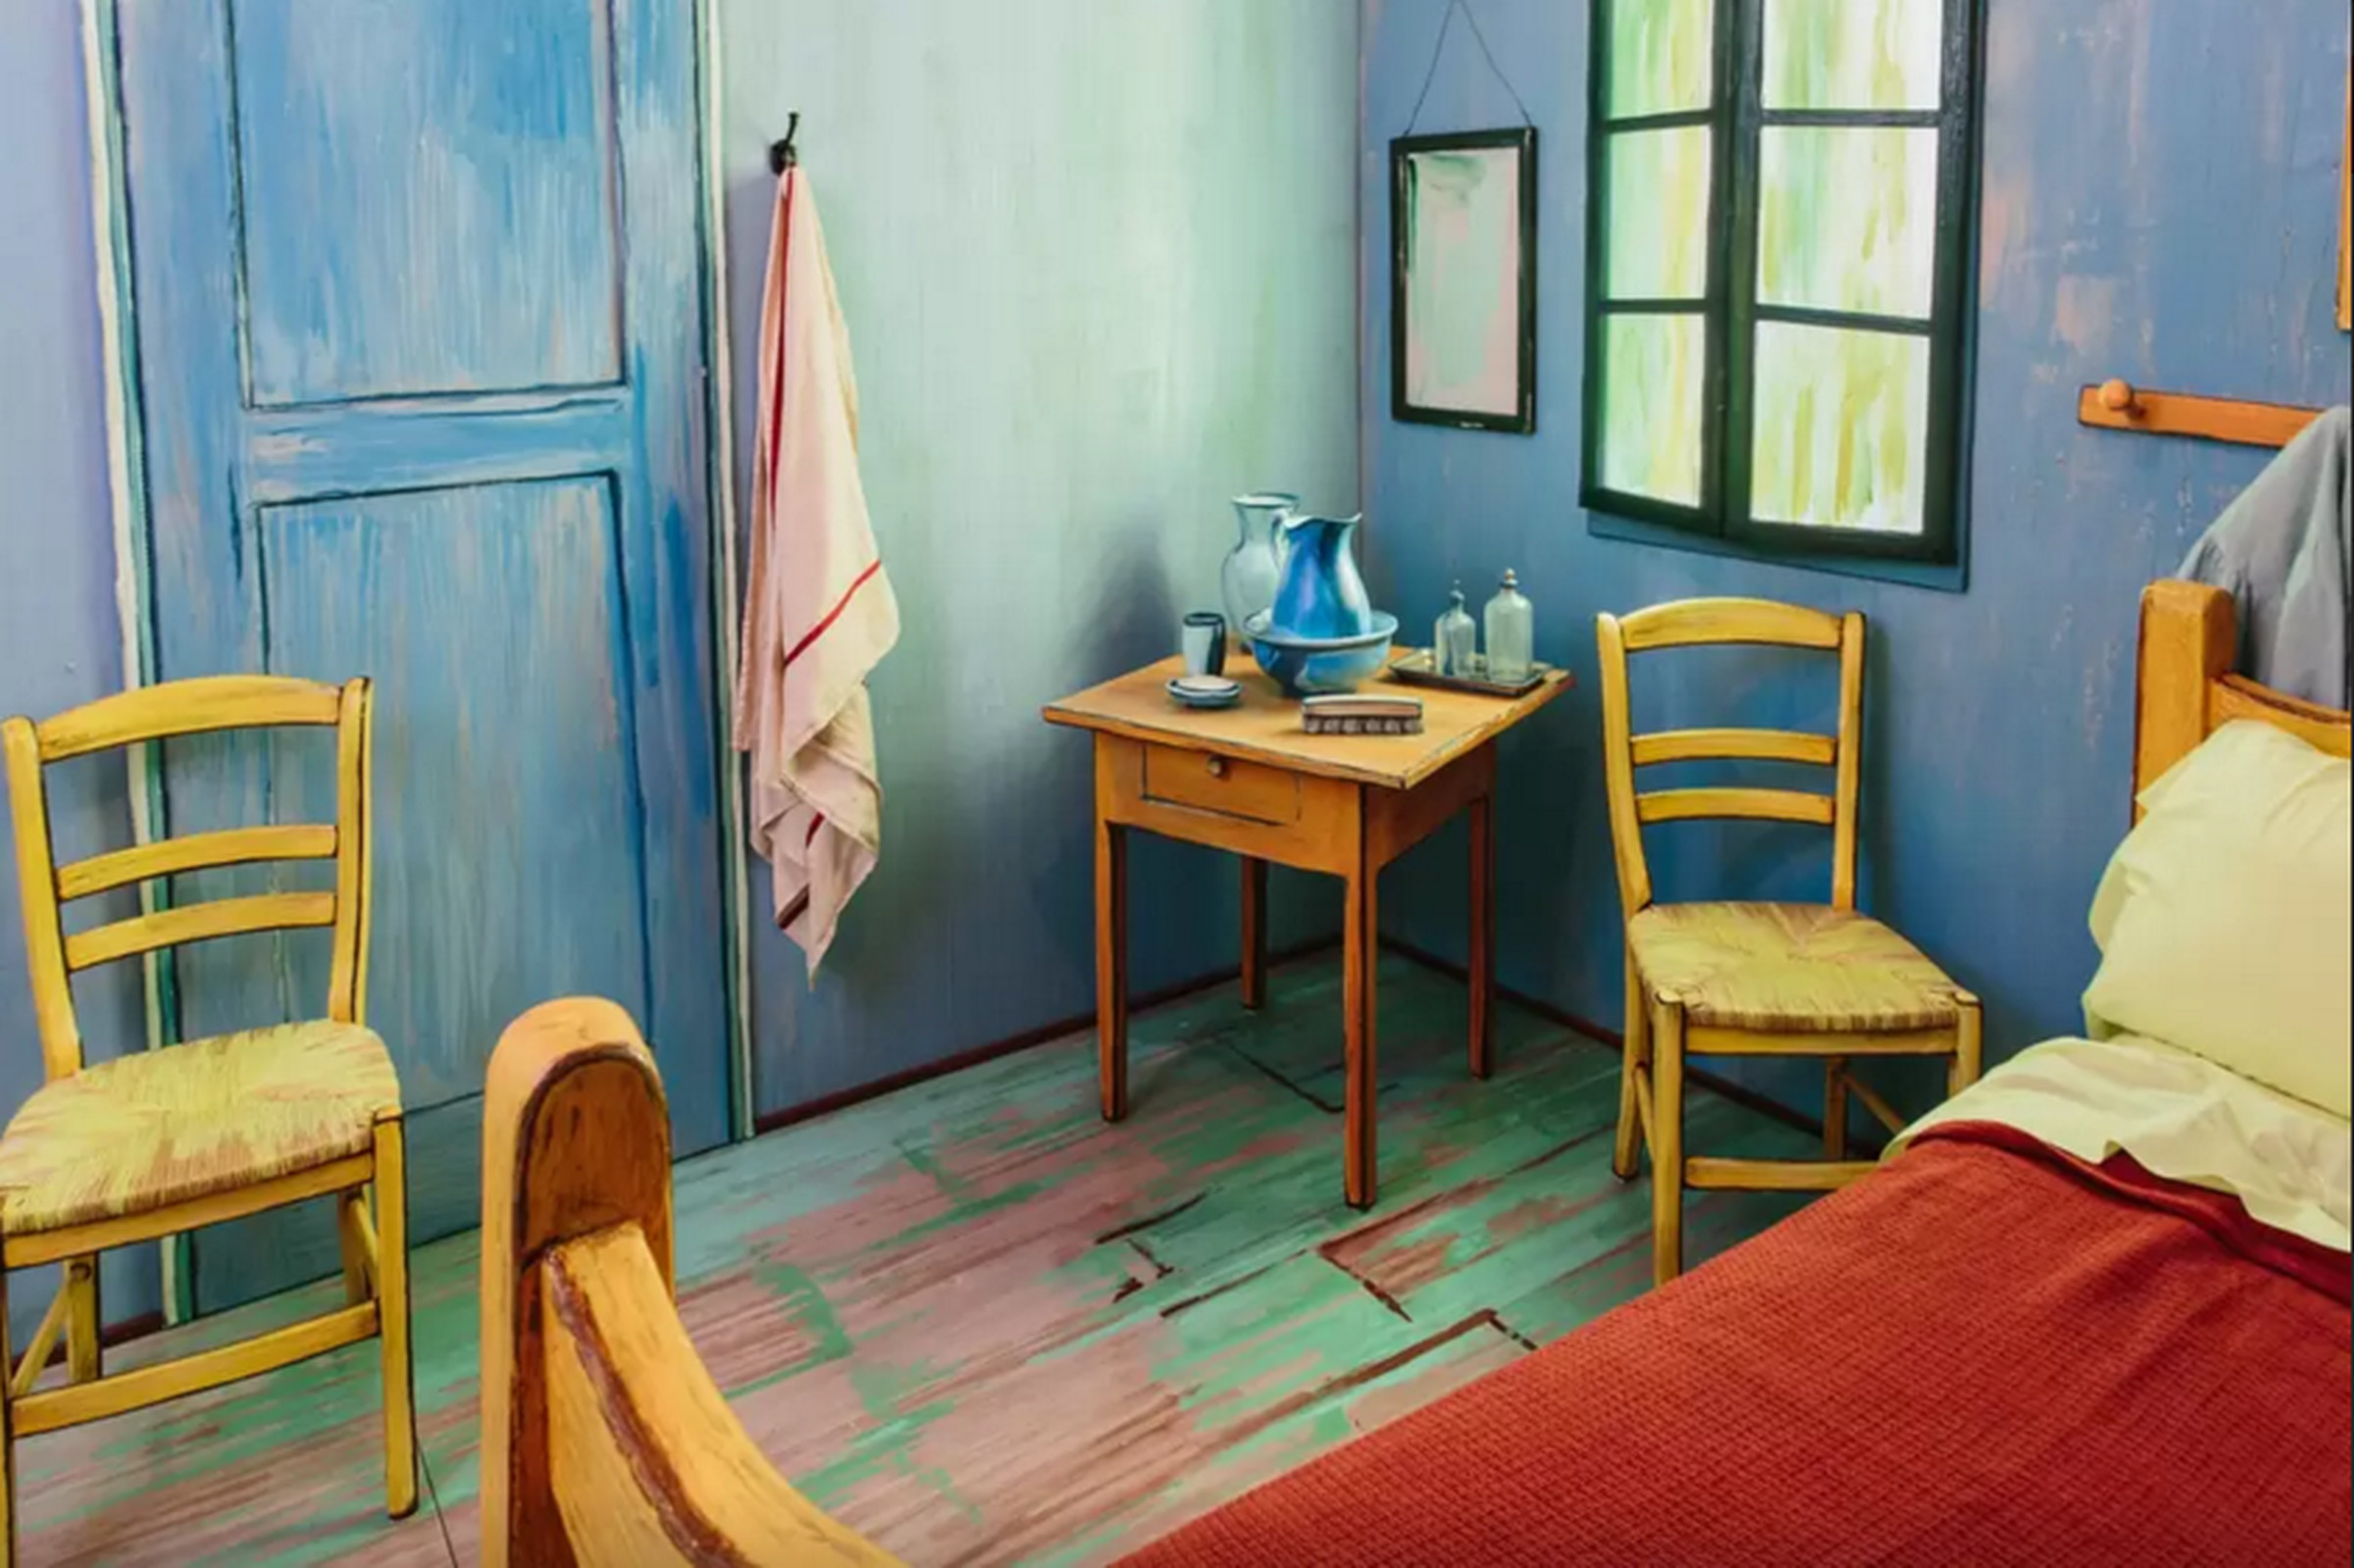 Vincent van Gogh Airbnb listing